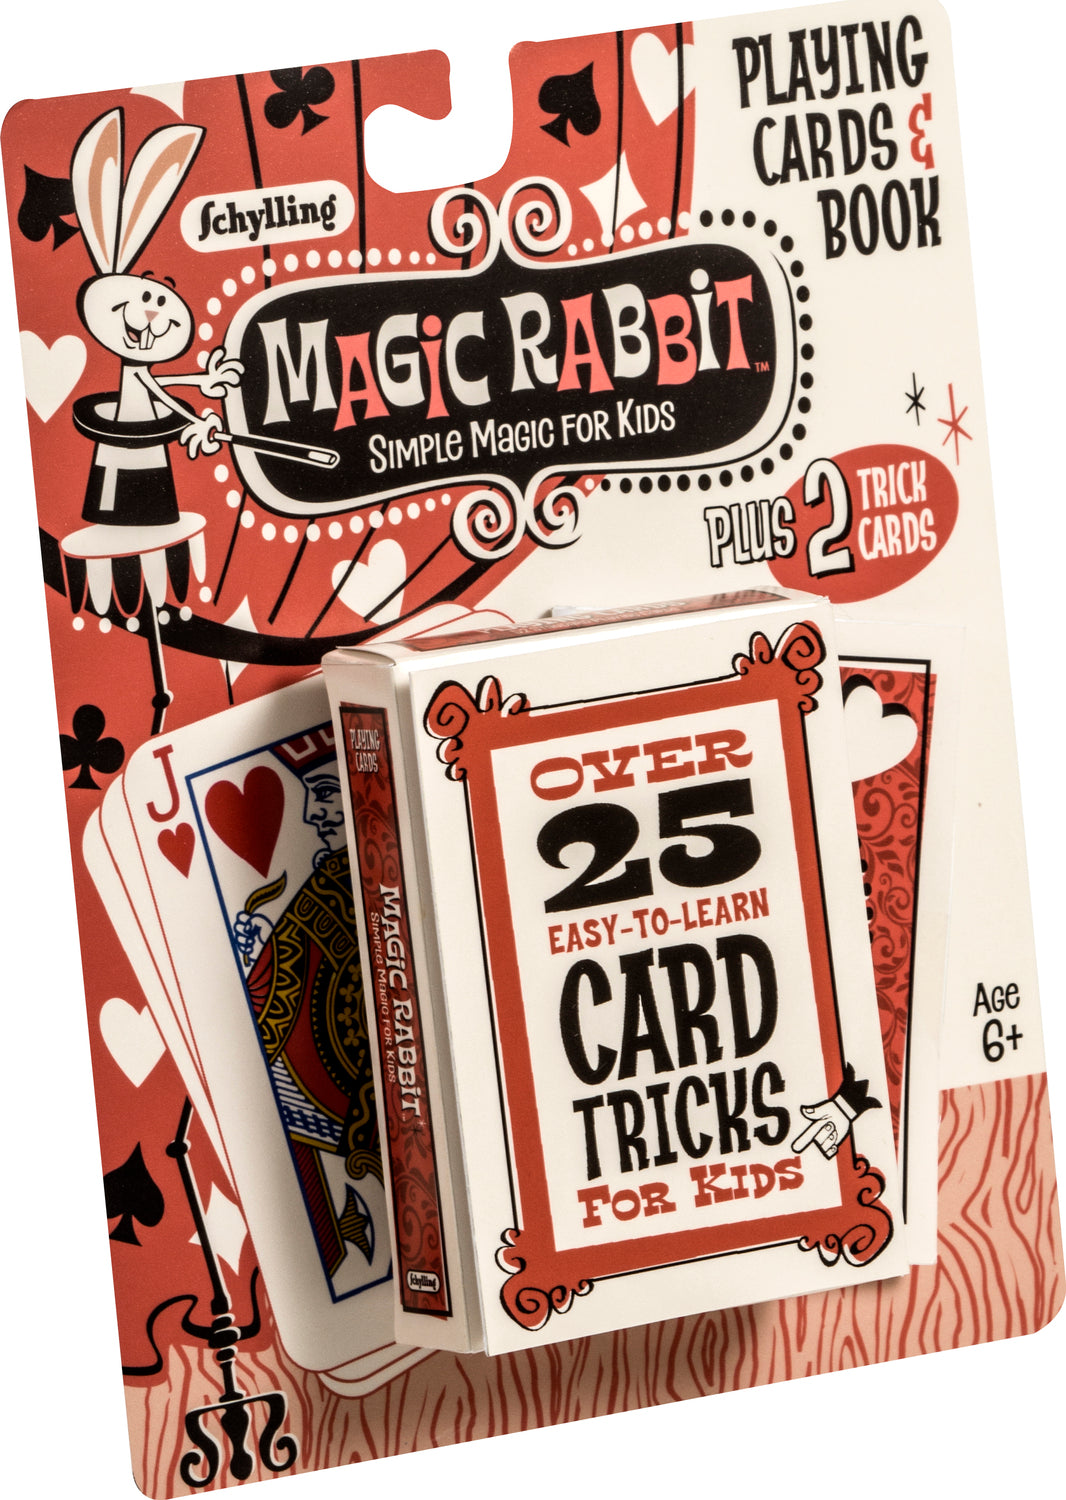 Magic Rabbit Card Tricks for Kids